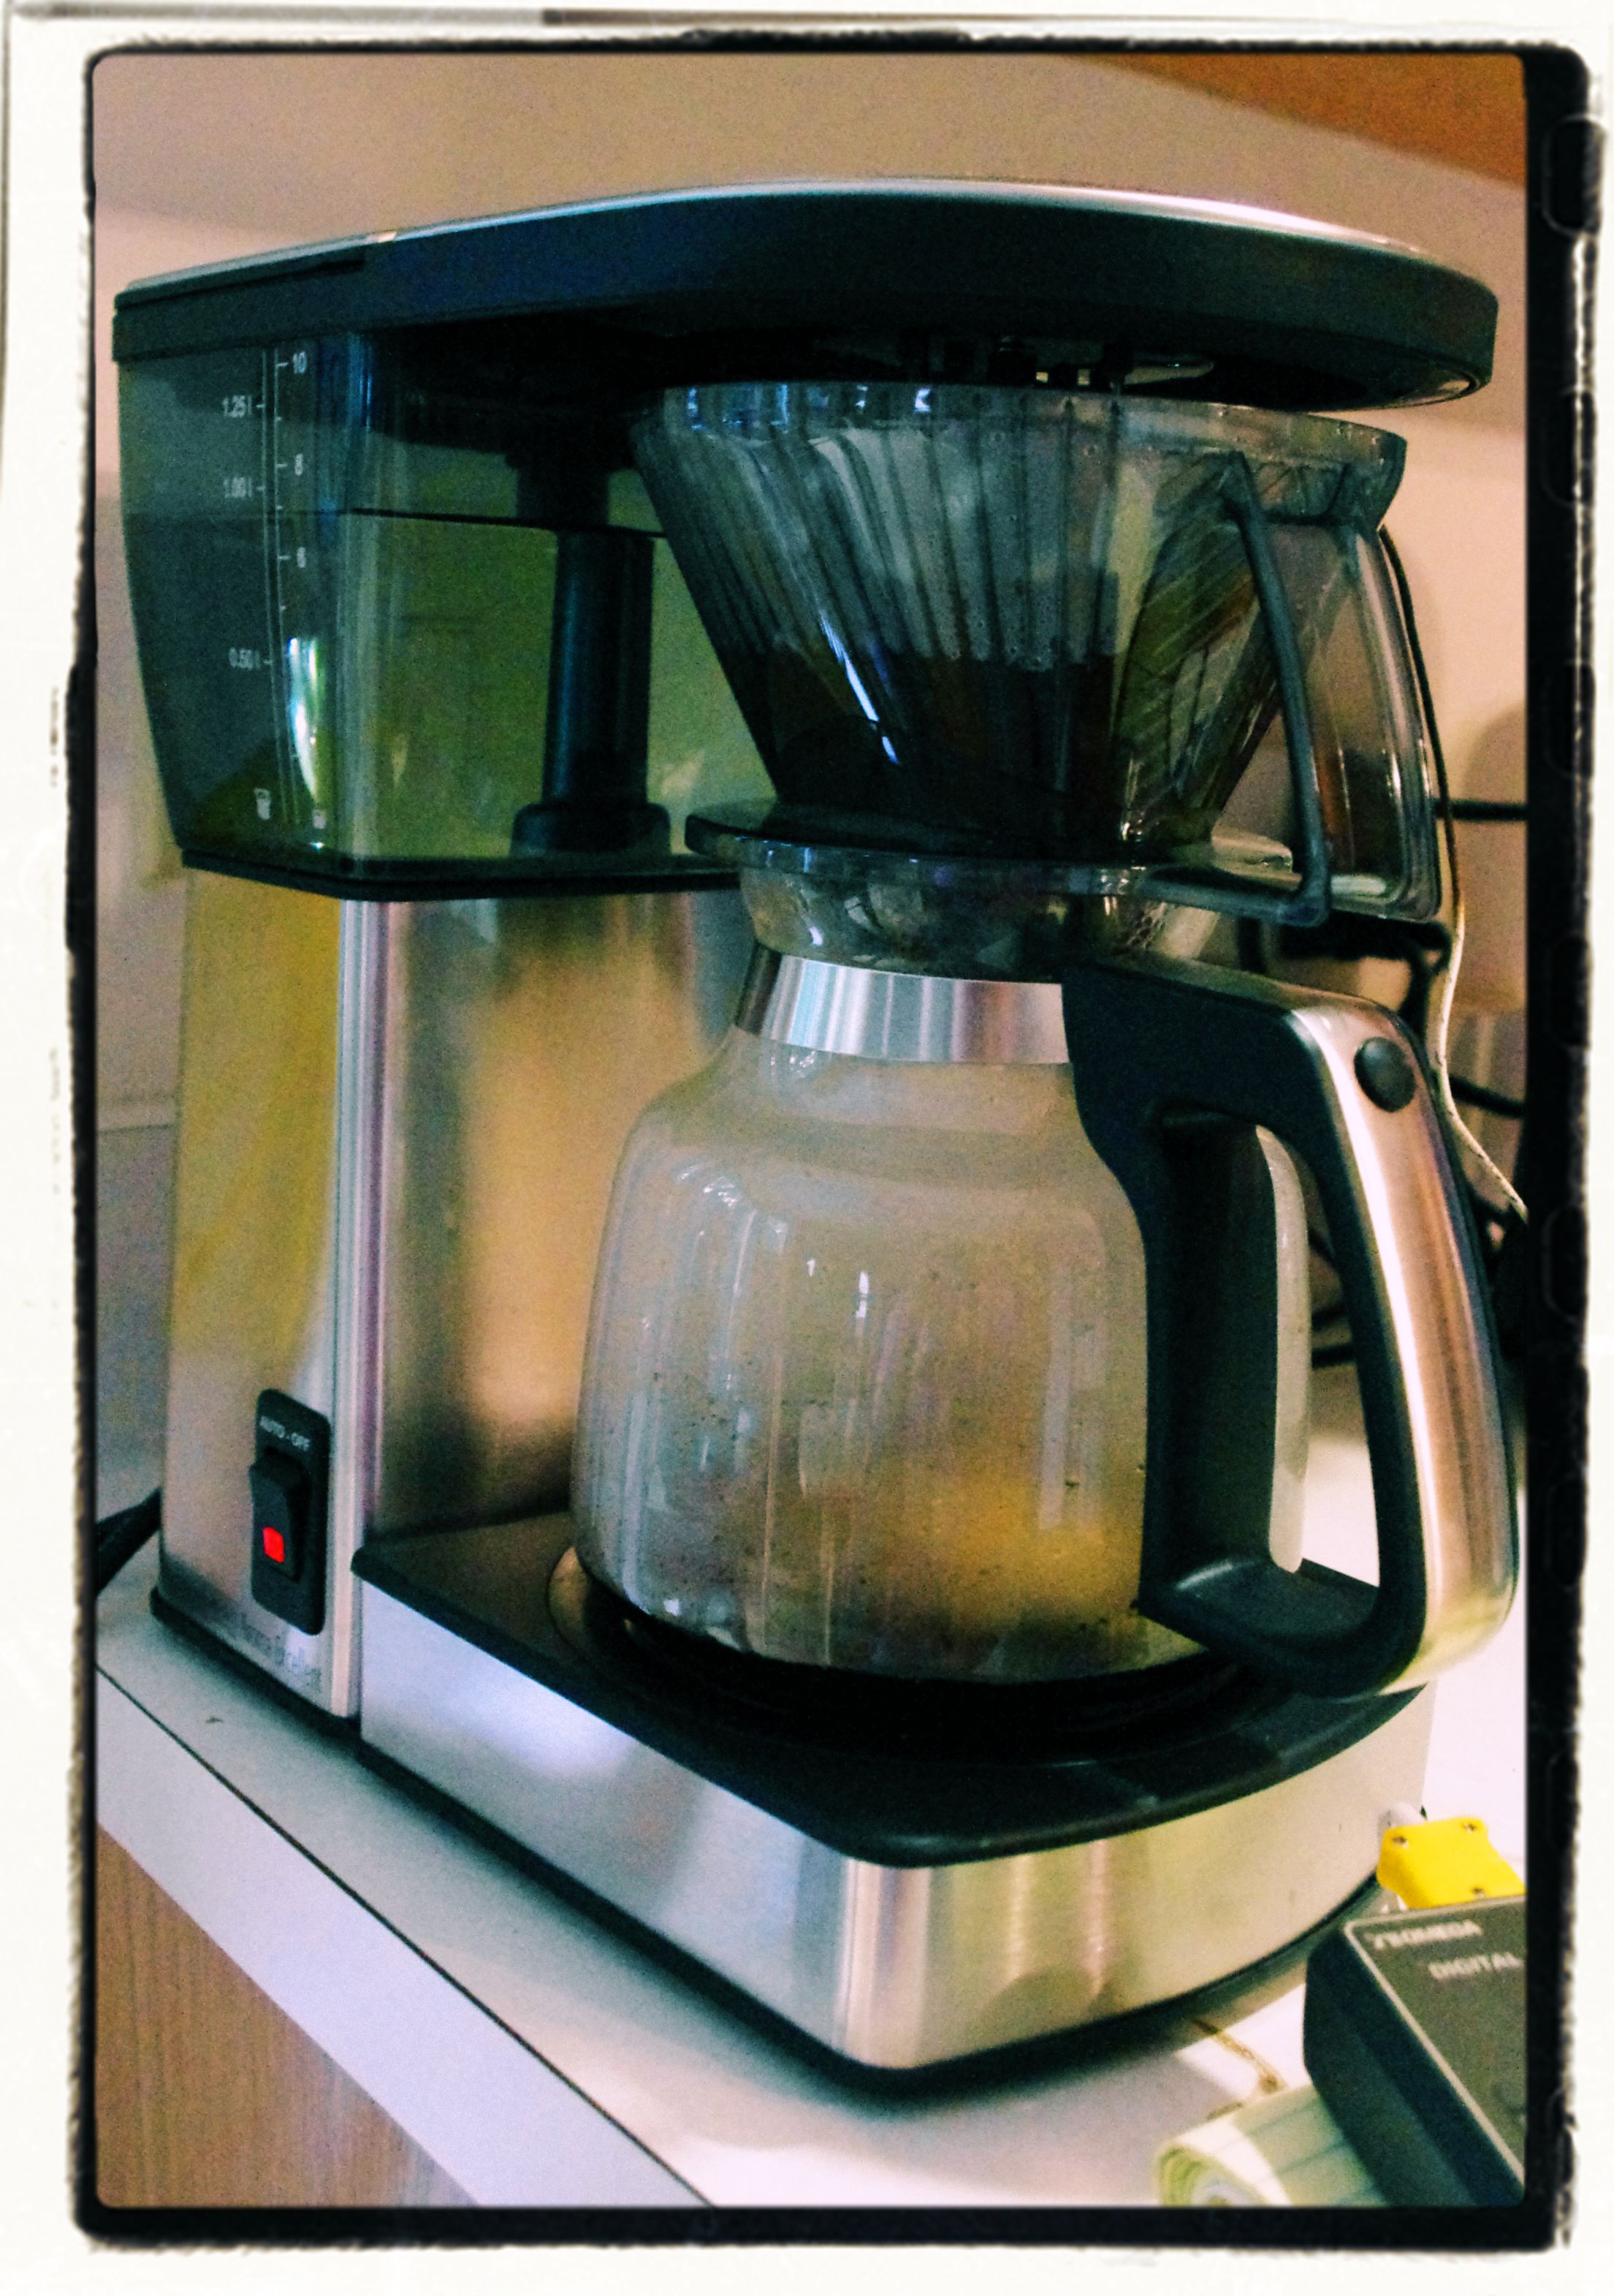 https://coffeecompanion.com/wp-content/uploads/2012/01/Bonavita-Coffeemaker-effects-1.jpg